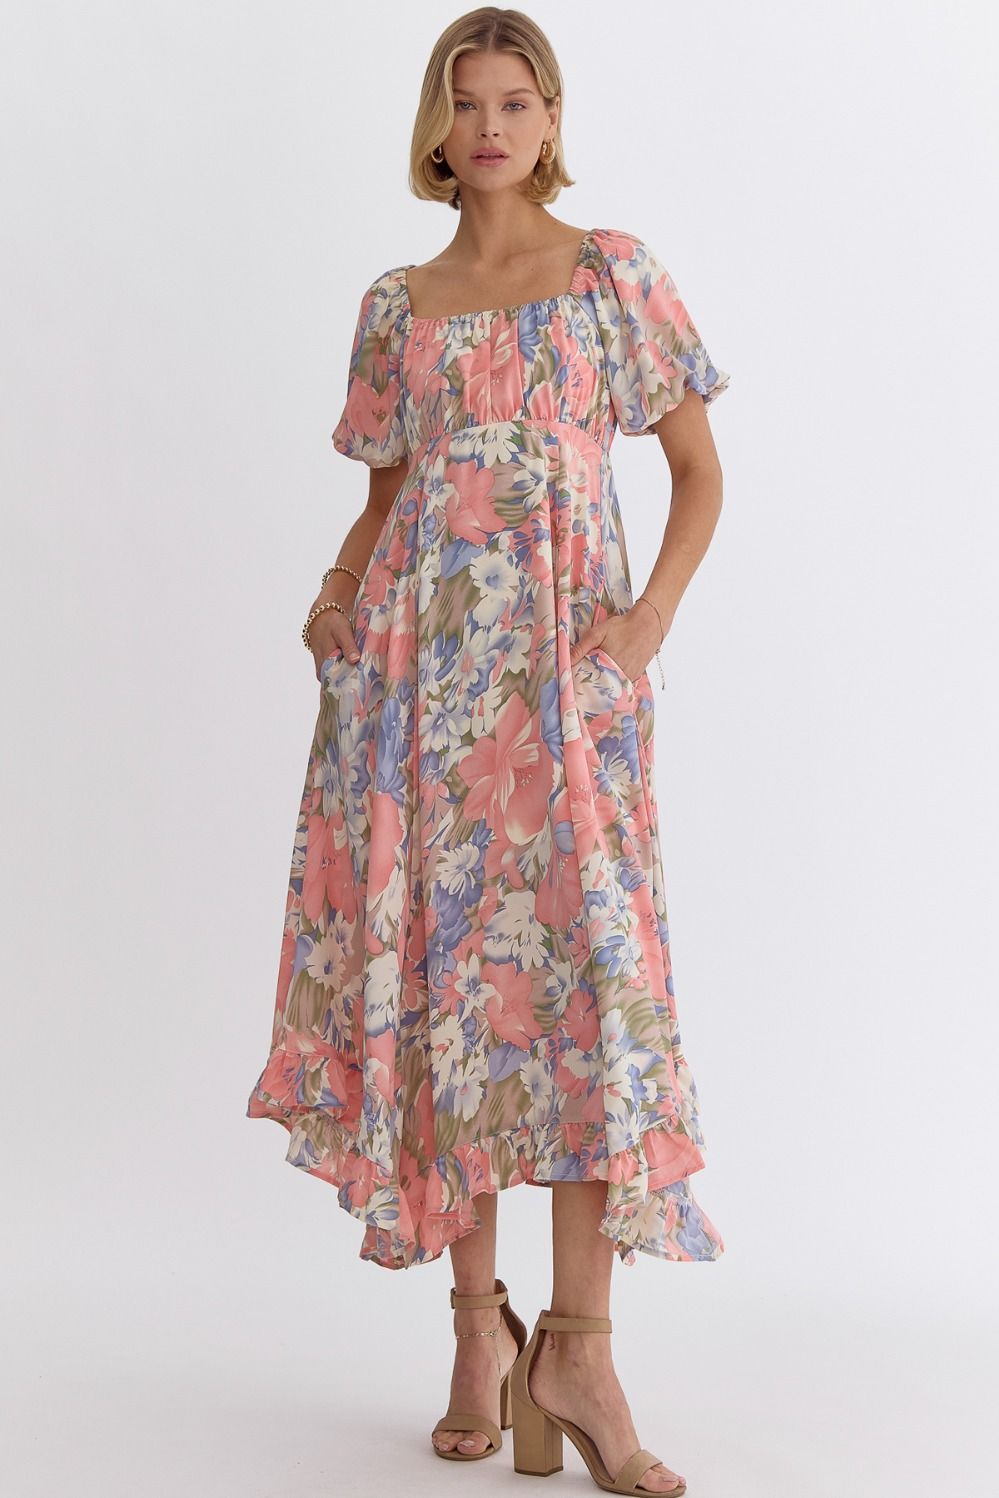 "Clarice" Floral Maxi Dress